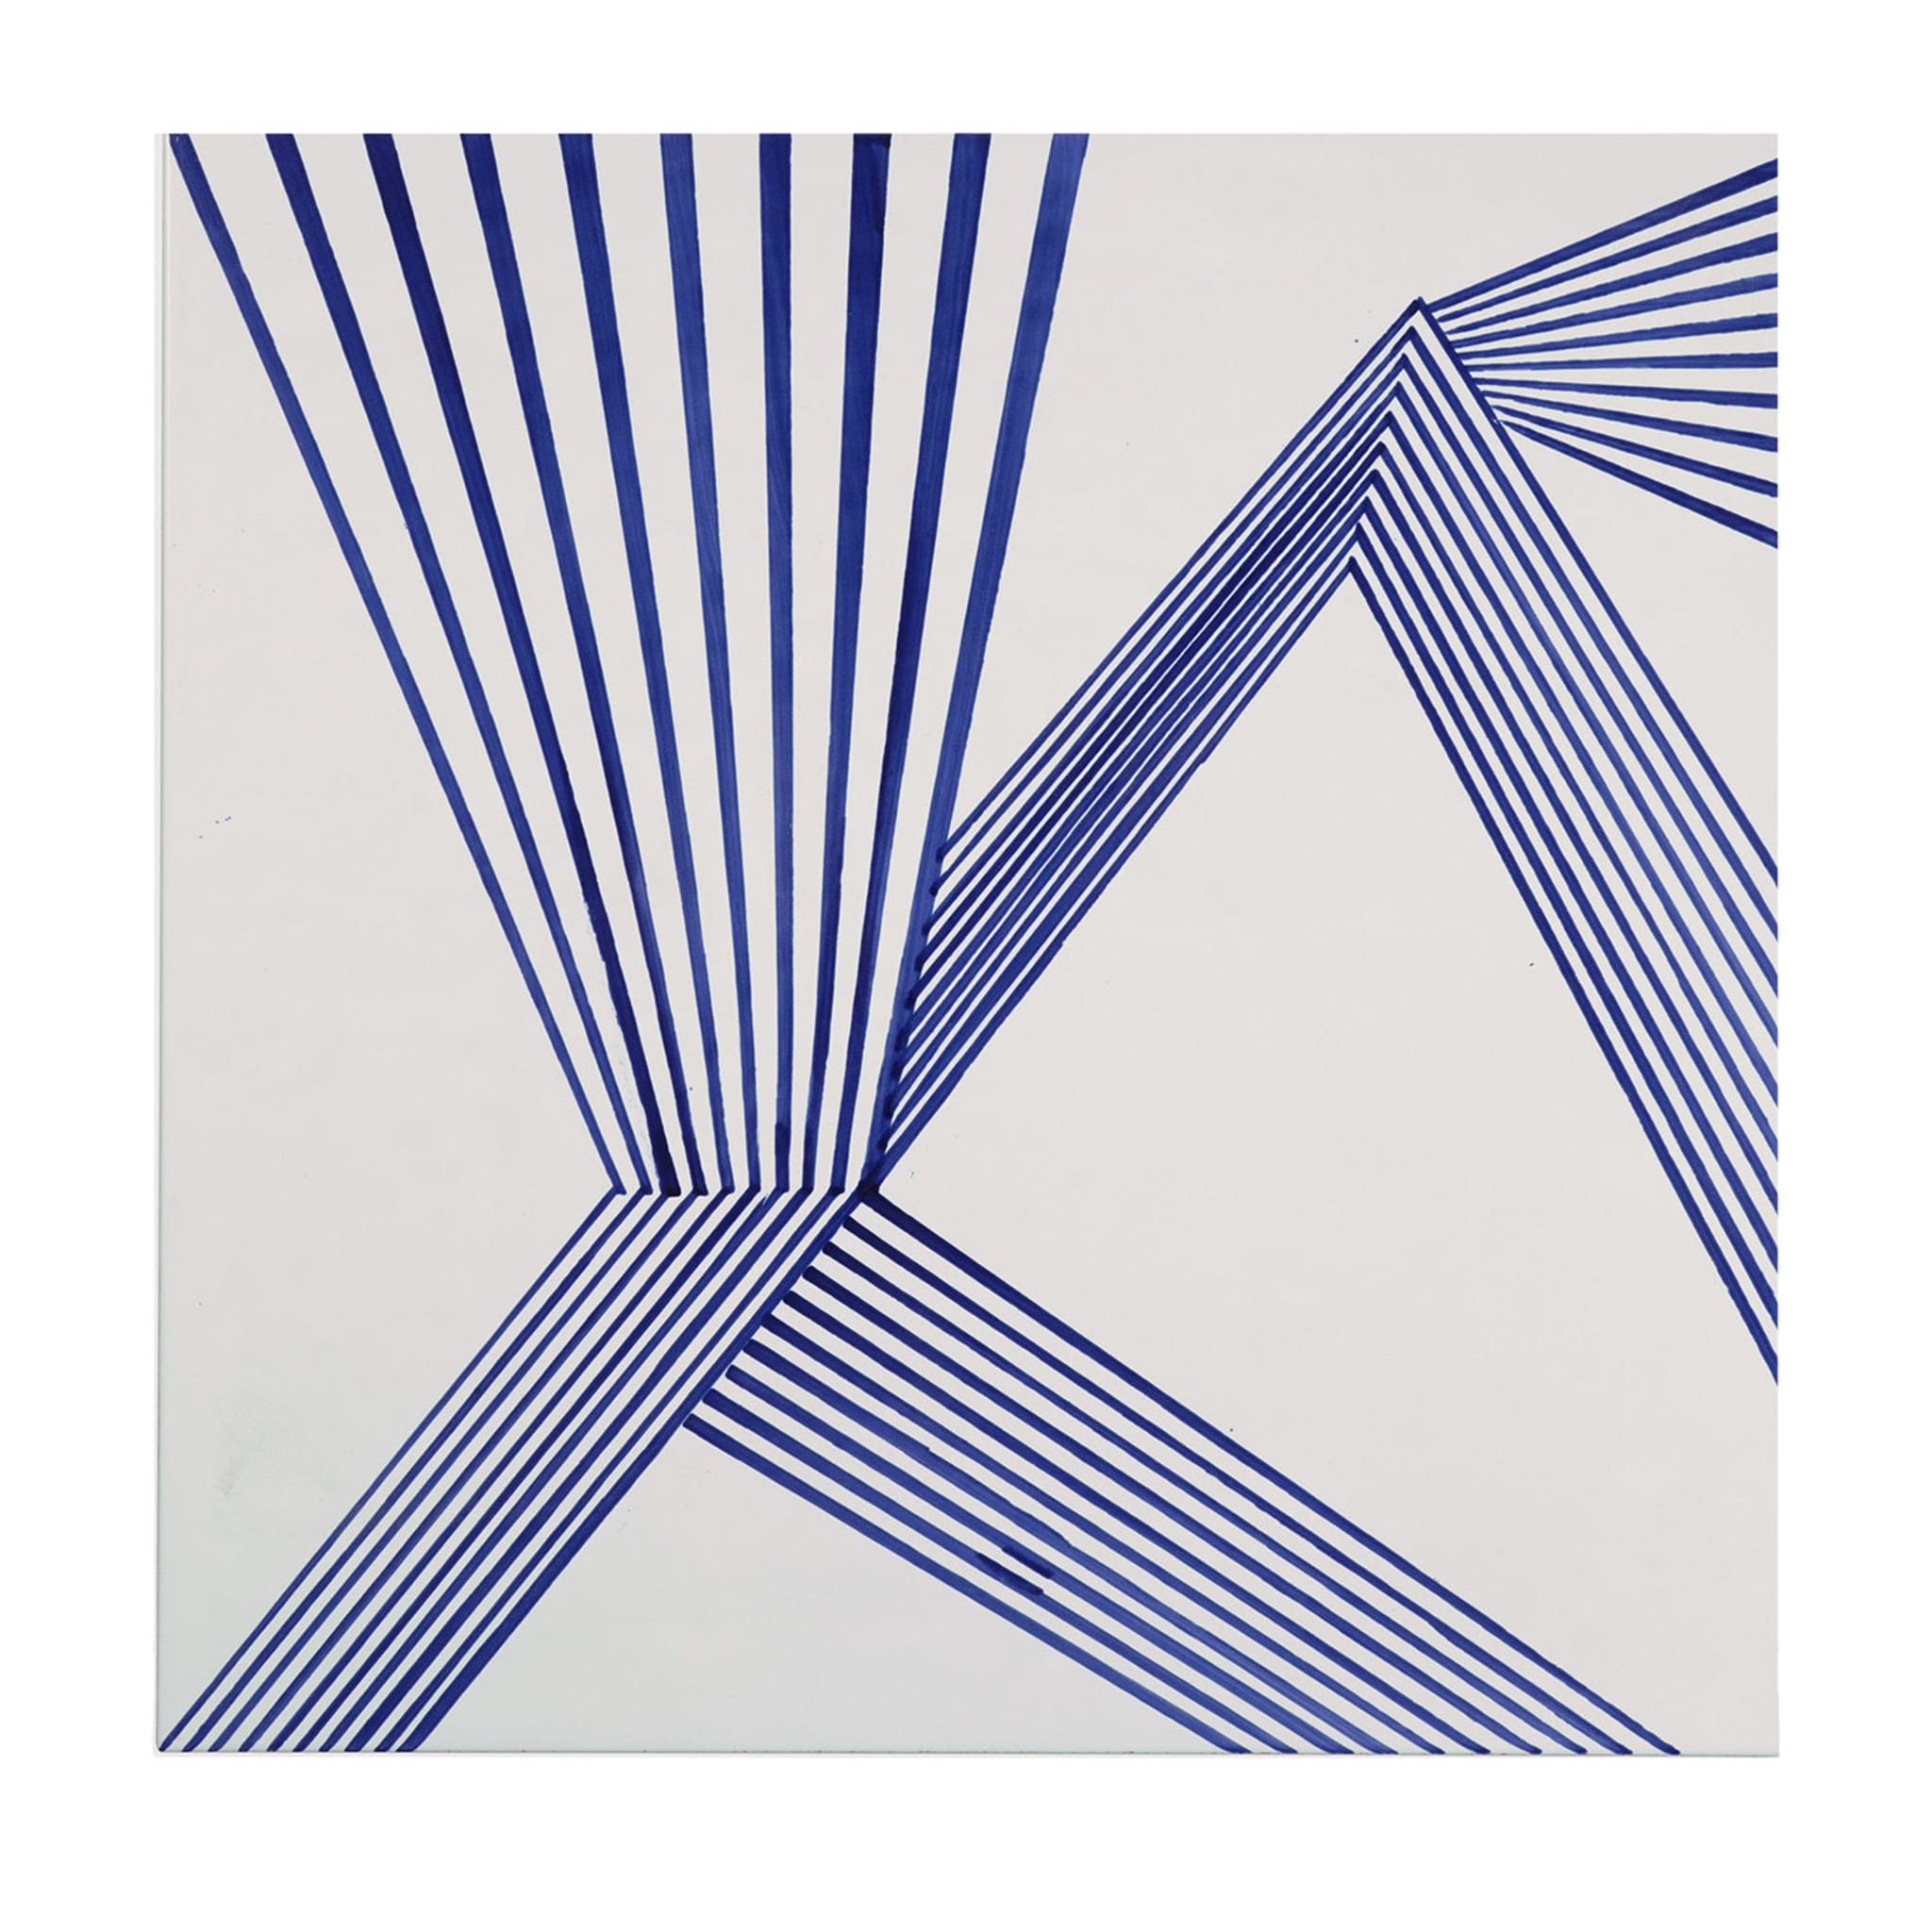 Geobard Intrecci Set of 4 Blue & White Tiles #1 - Main view